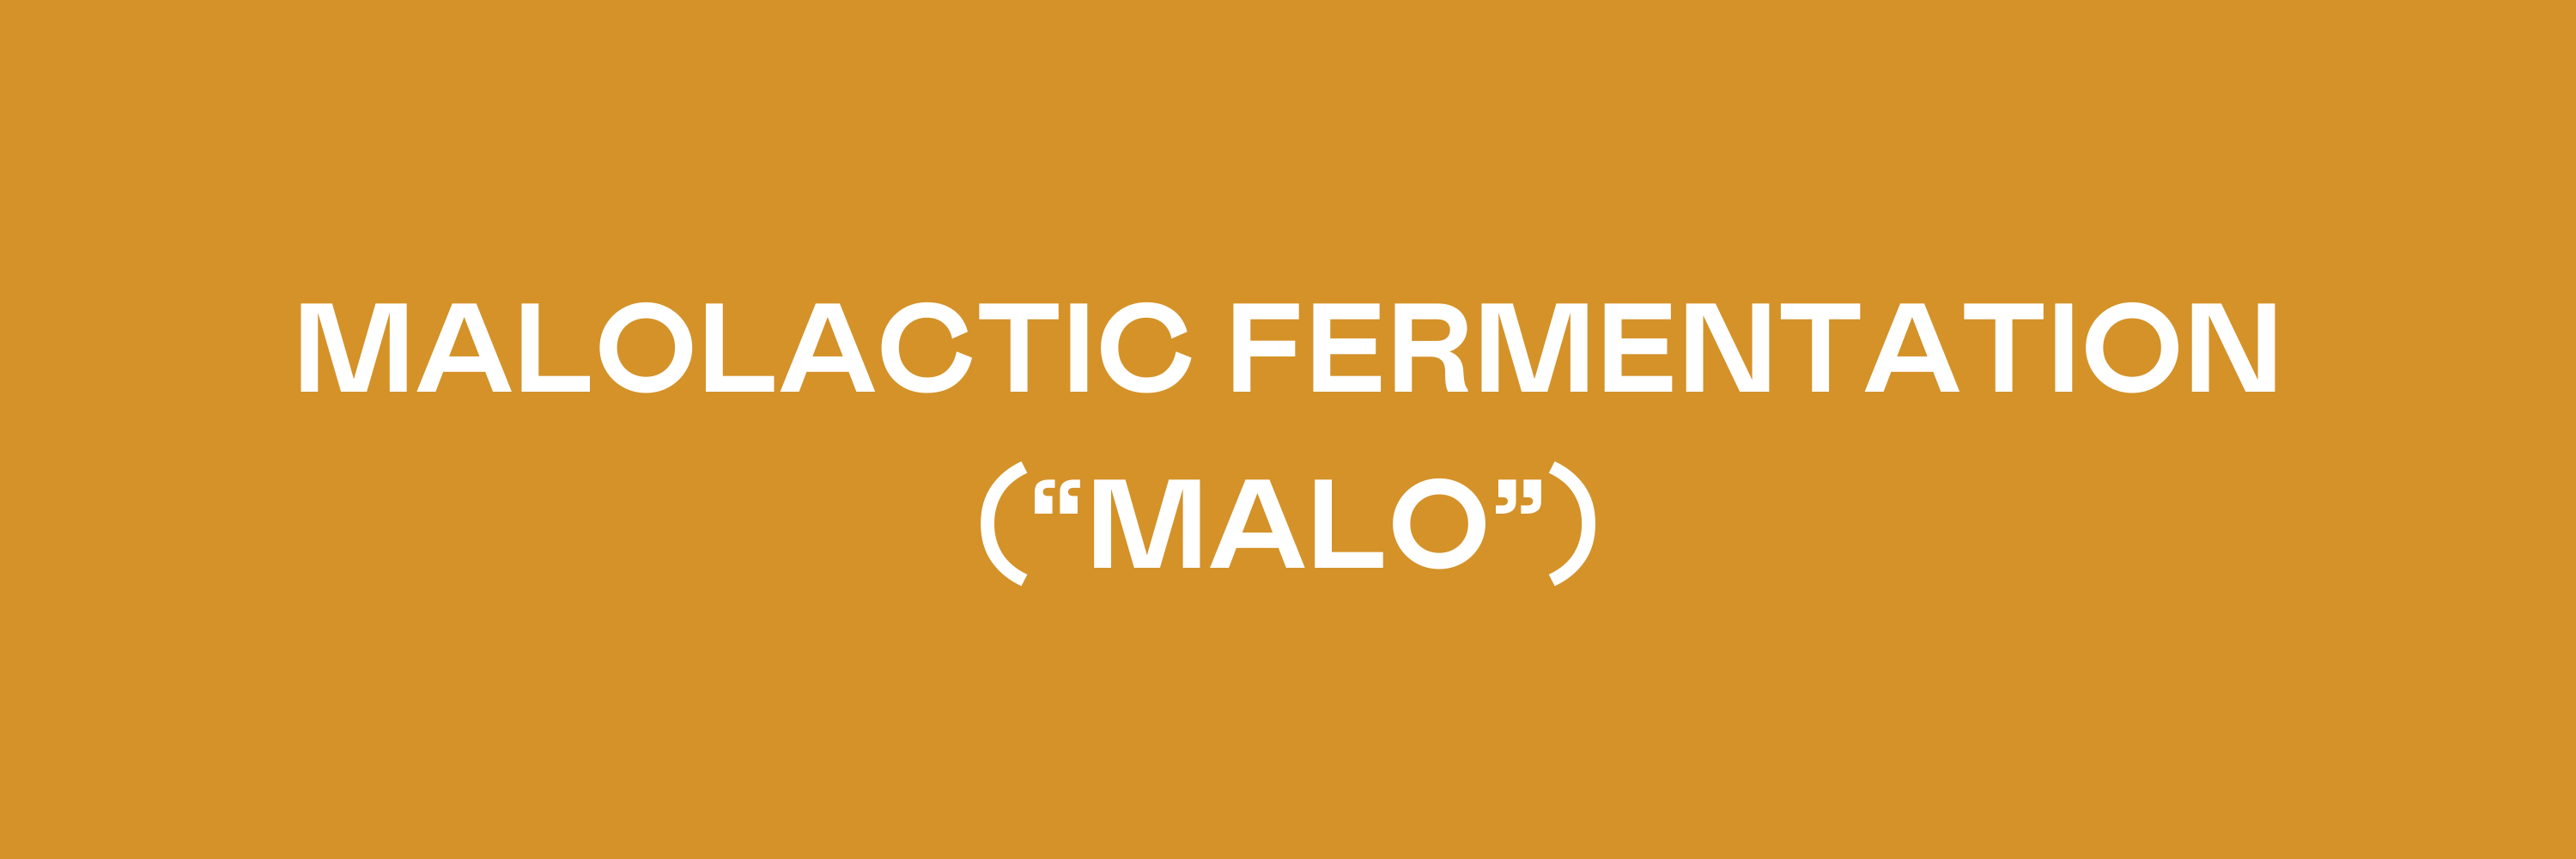 Malolactic Fermentation (“Malo”)